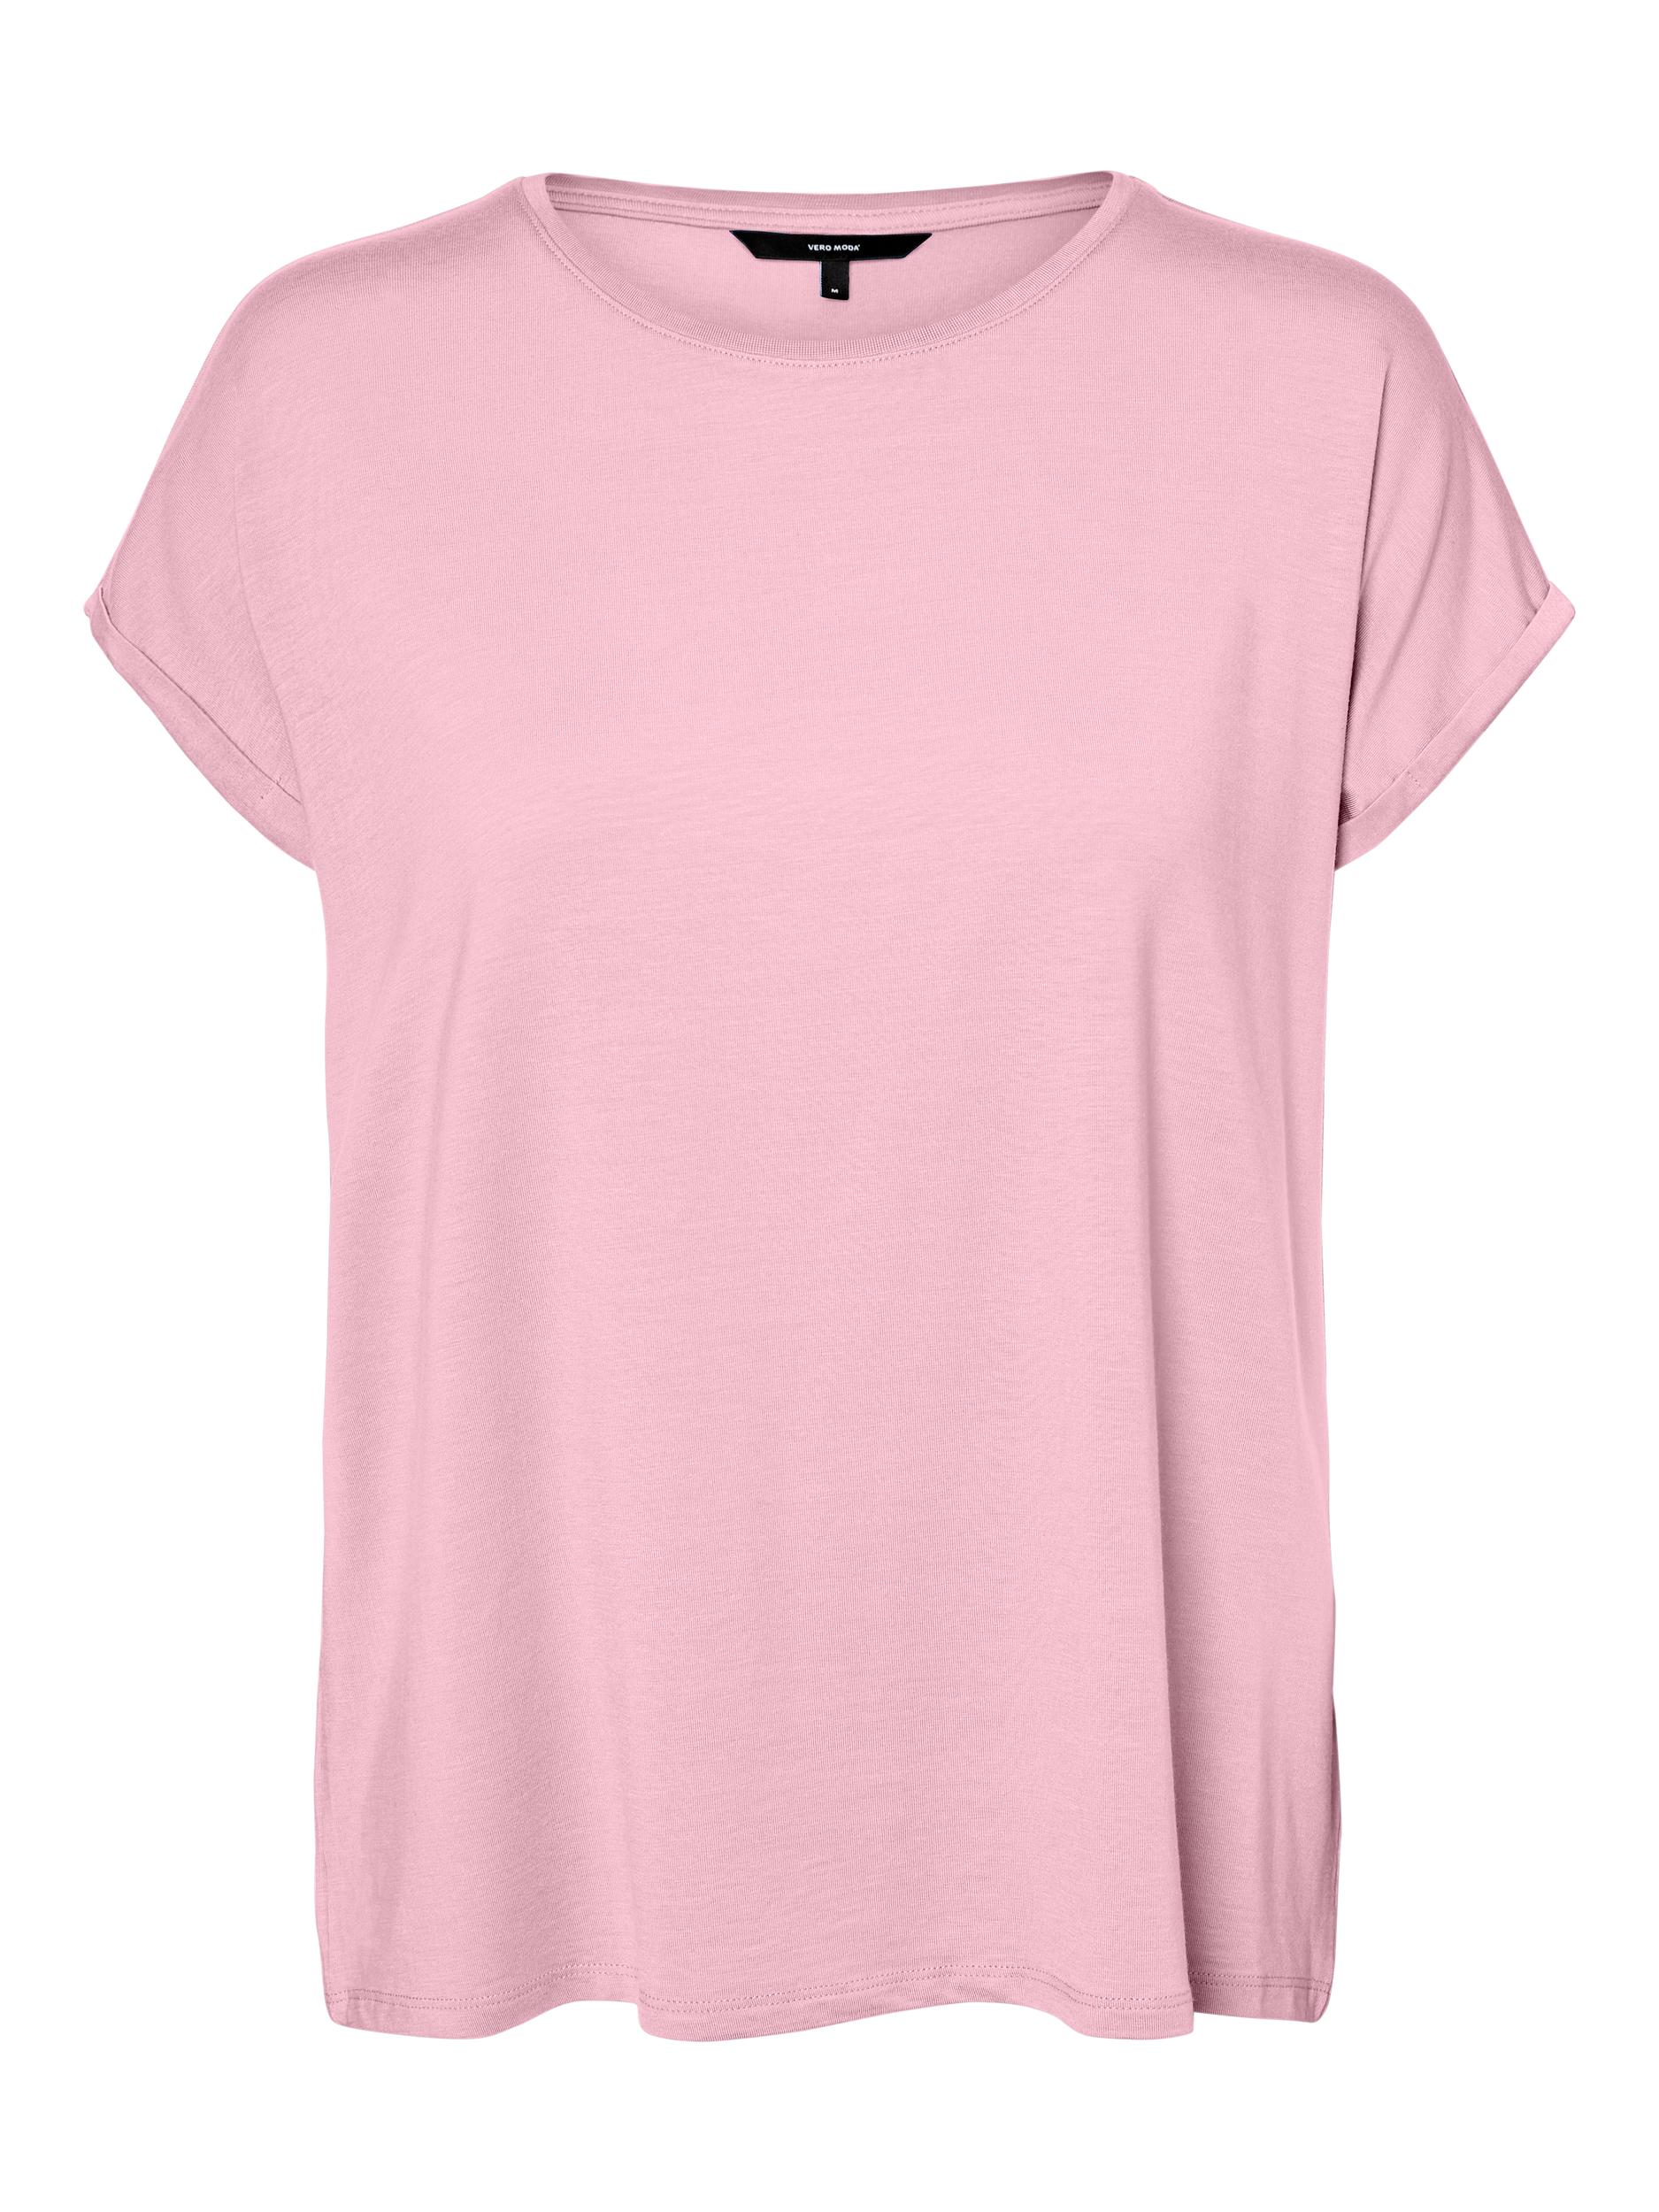 Vero Moda Ava T-shirt, Parfait Pink, XS